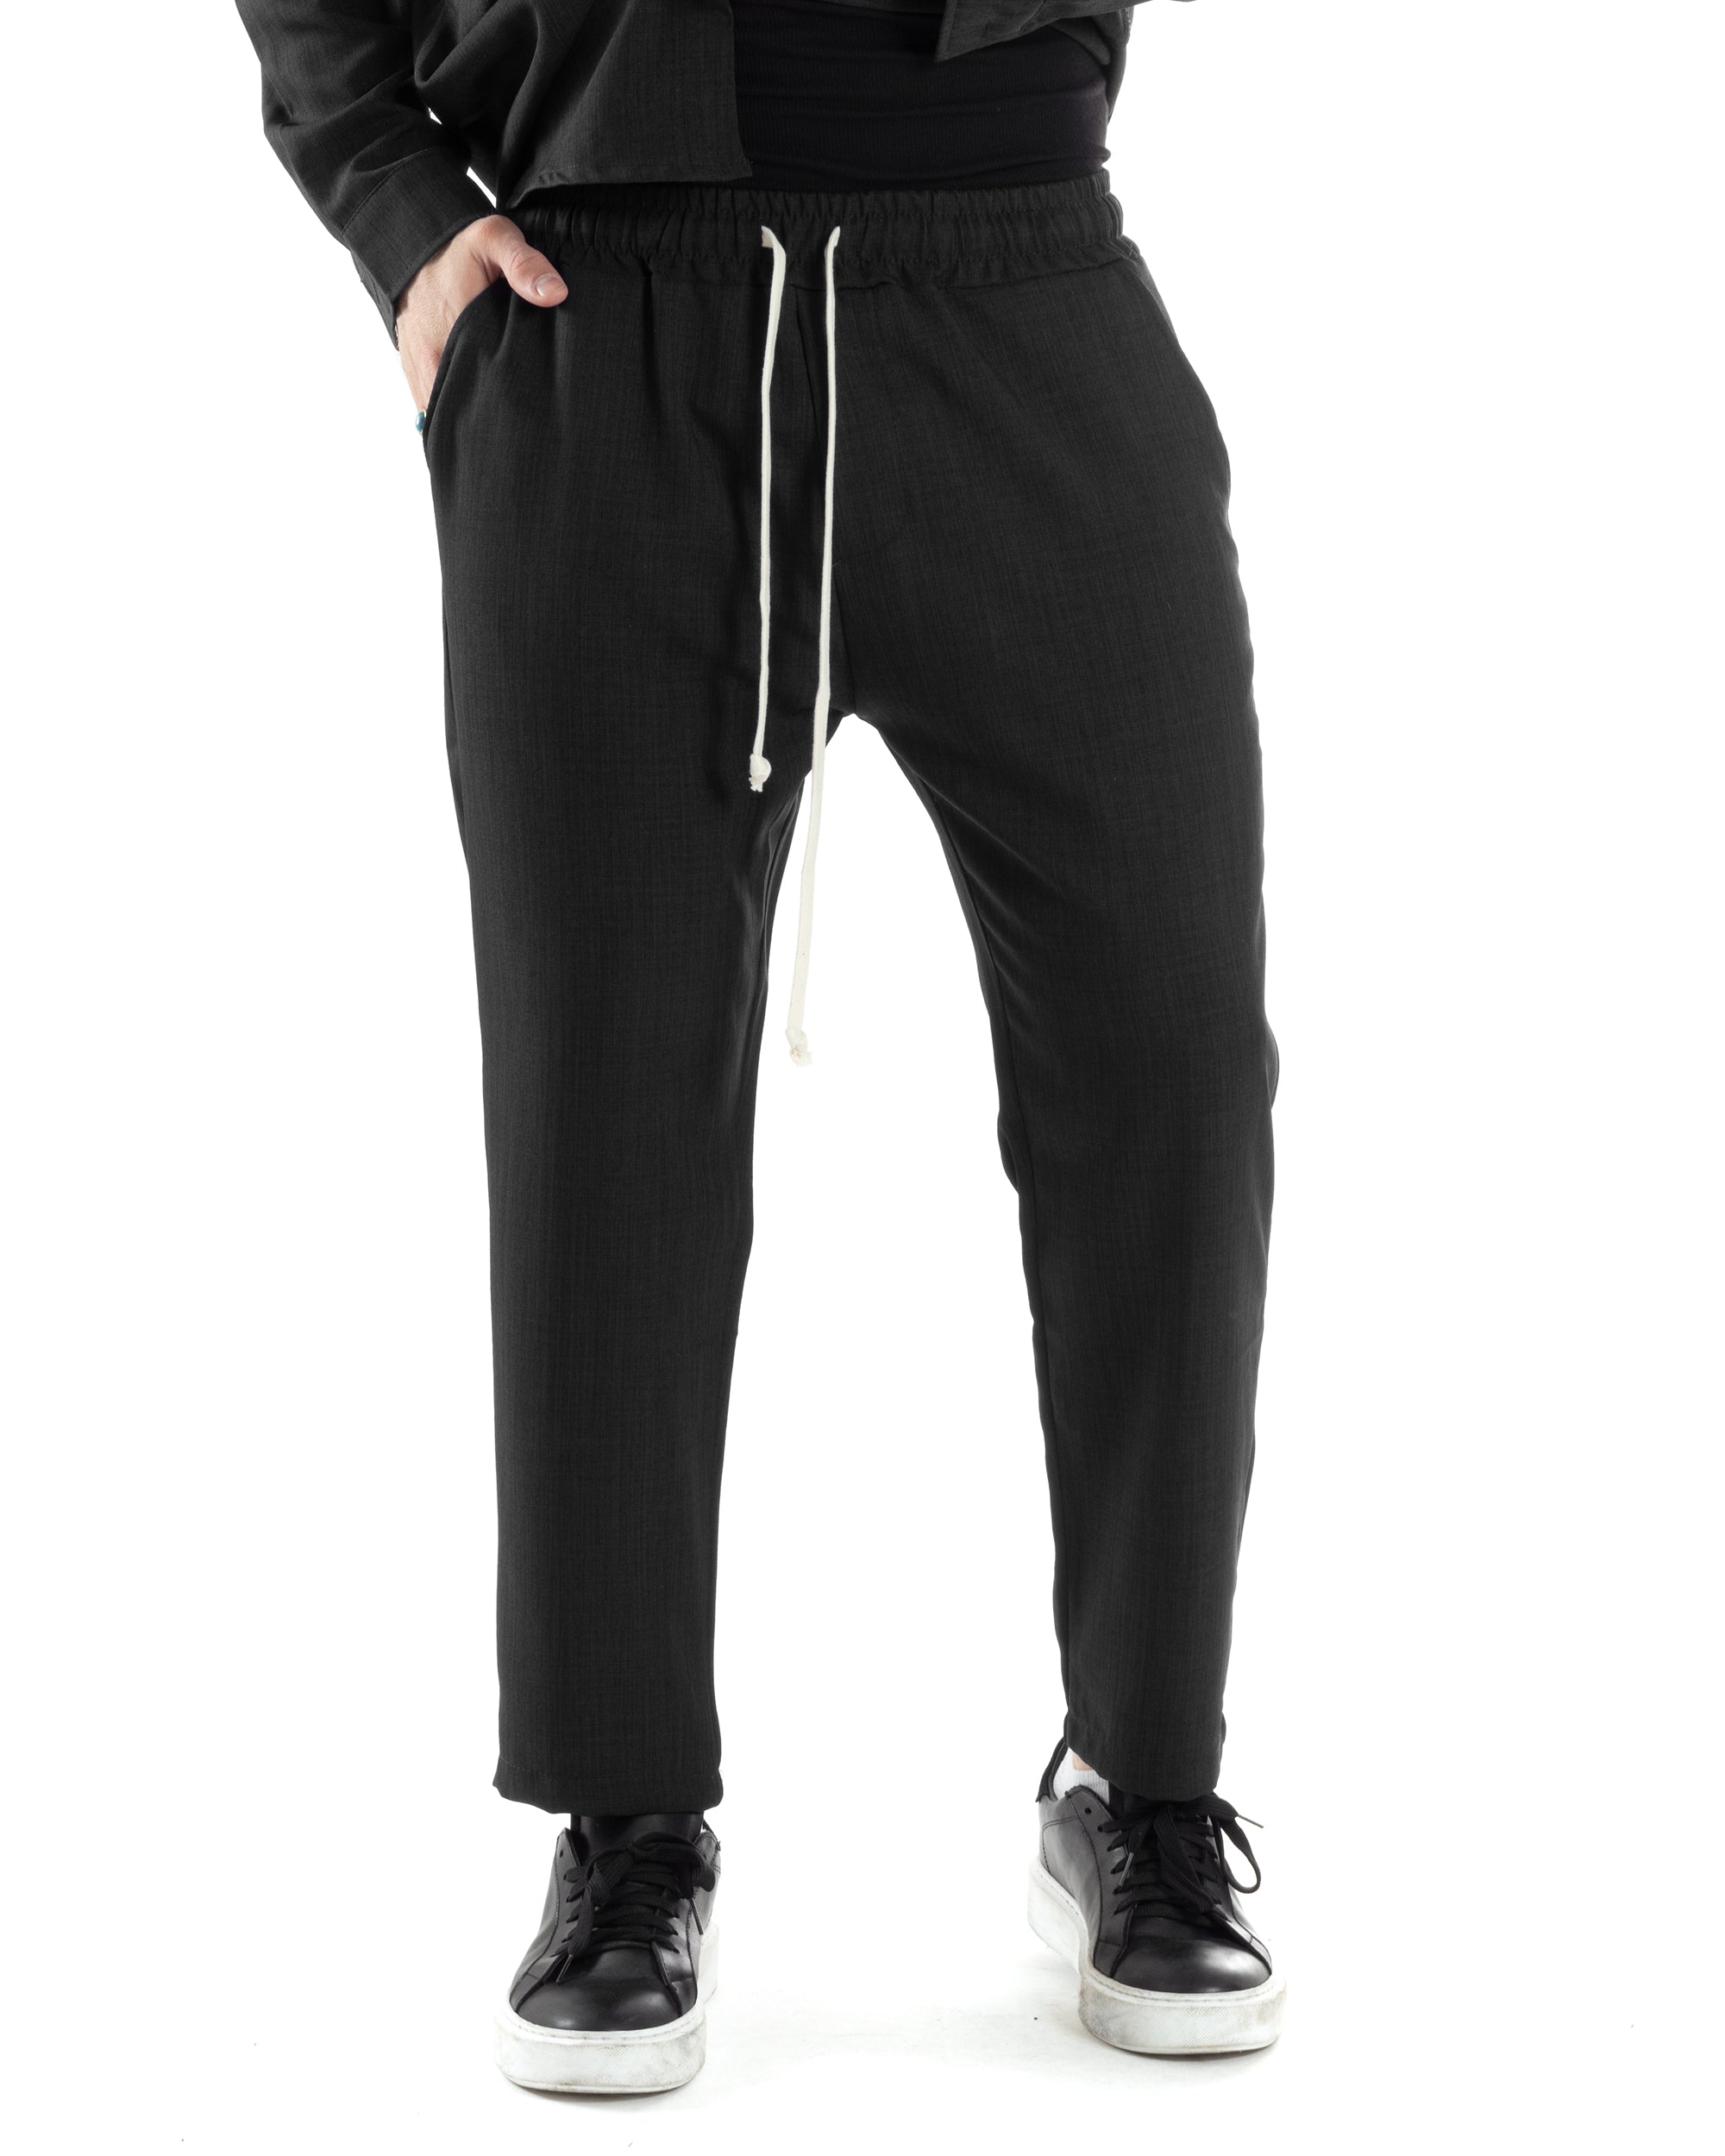 Completo Set Coordinato Uomo Viscosa Camicia Pantaloni Jogger Outfit Melangiato Nero GIOSAL-OU2452A